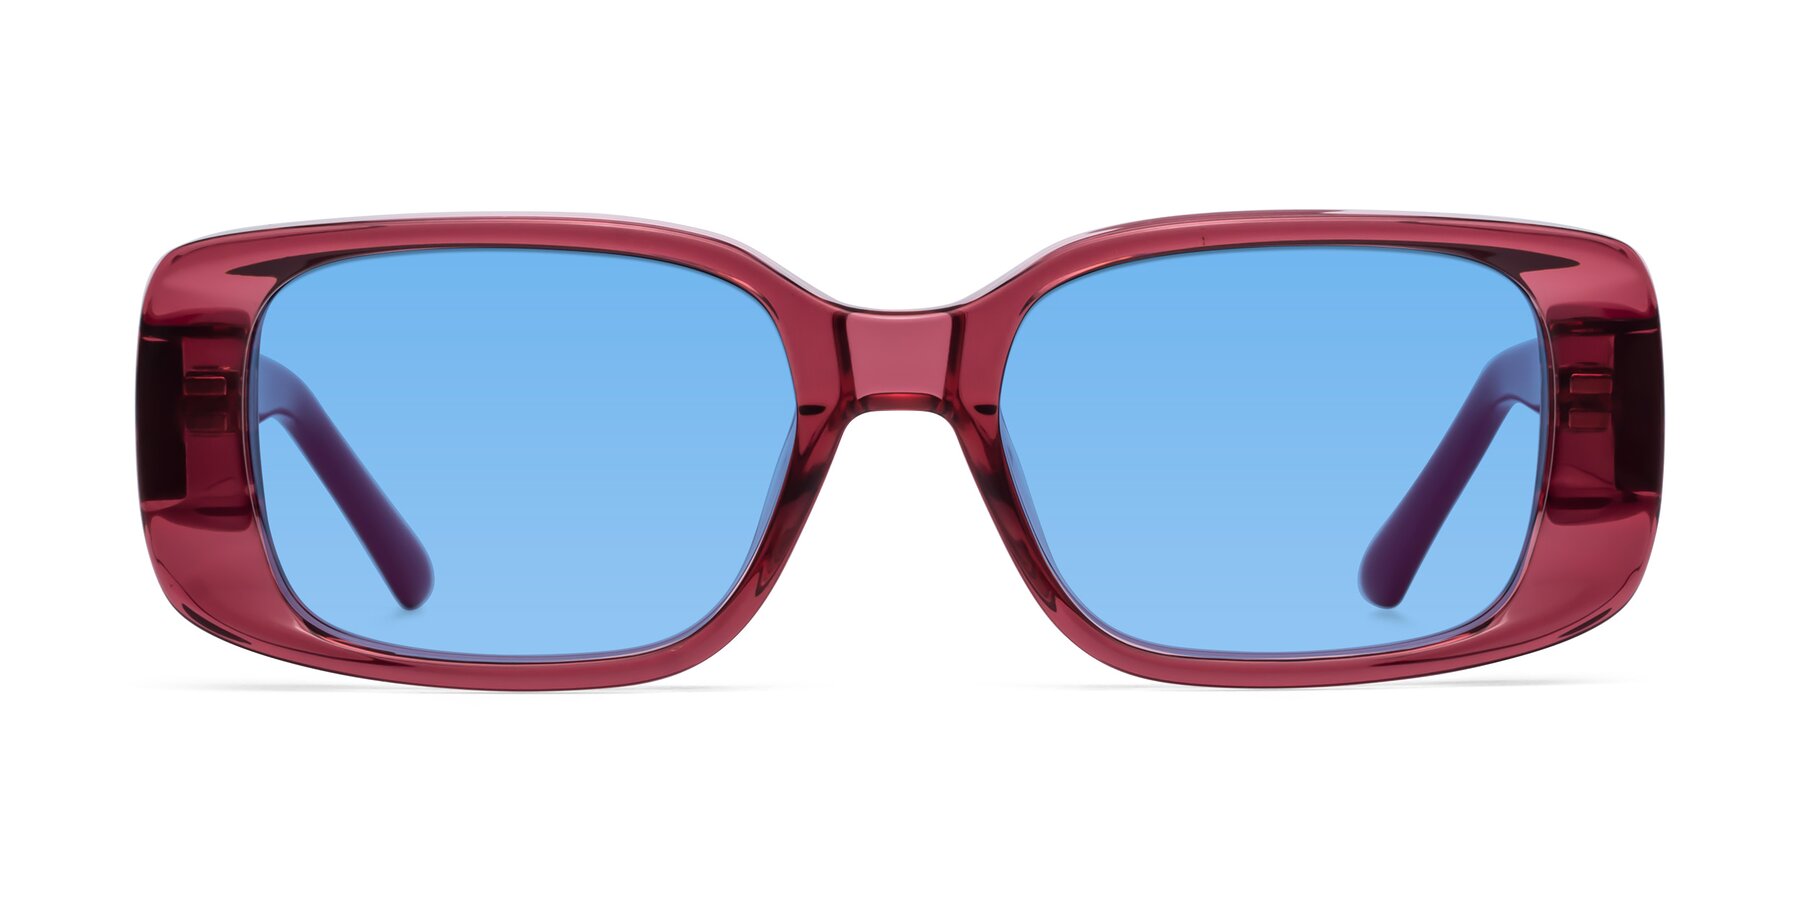 Posh - Transparent Pink Sunglasses